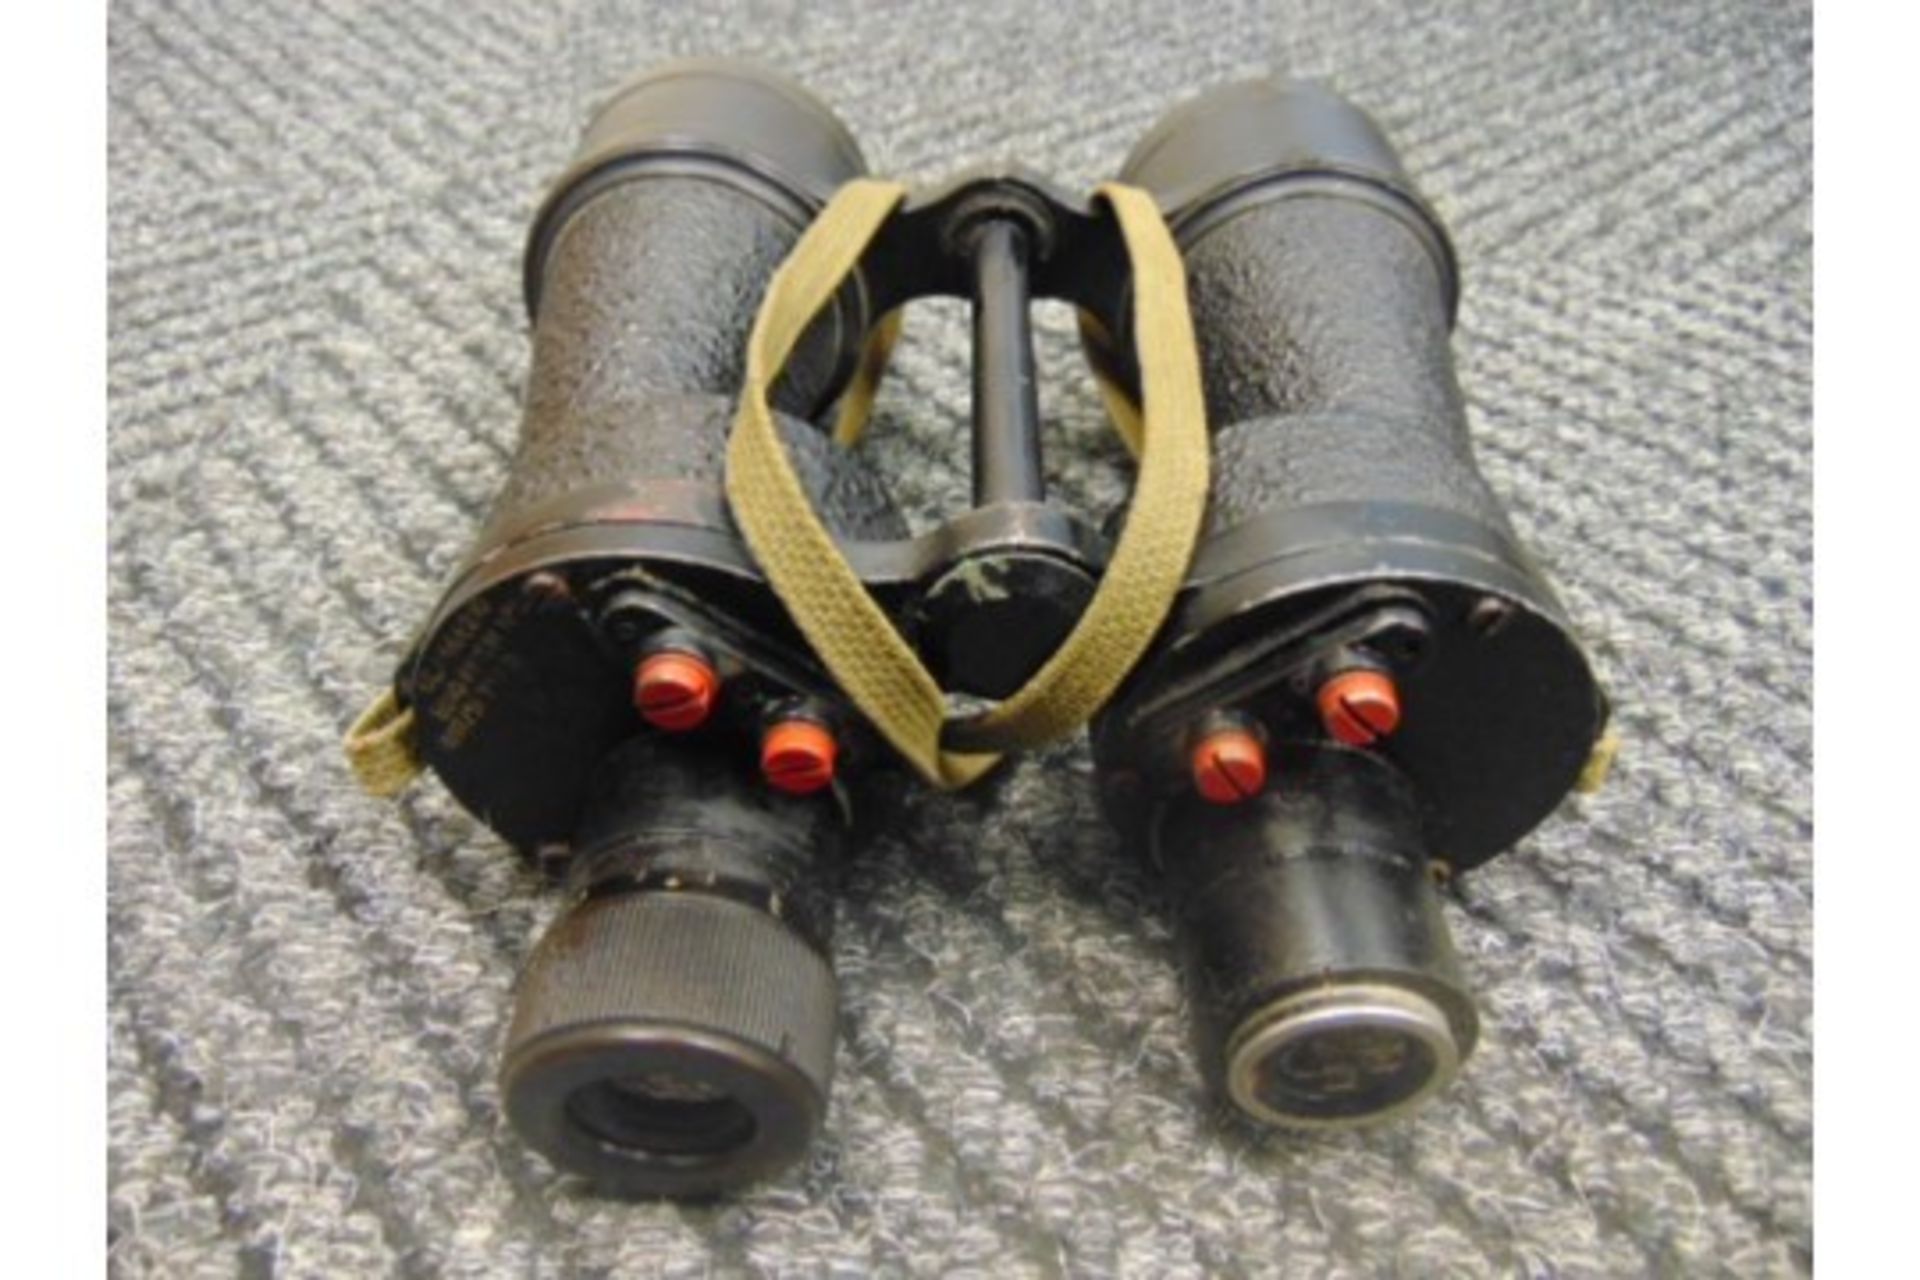 Ross of London No.5 Mk. 4 7x50 Bino Prism Binoculars - Image 3 of 5